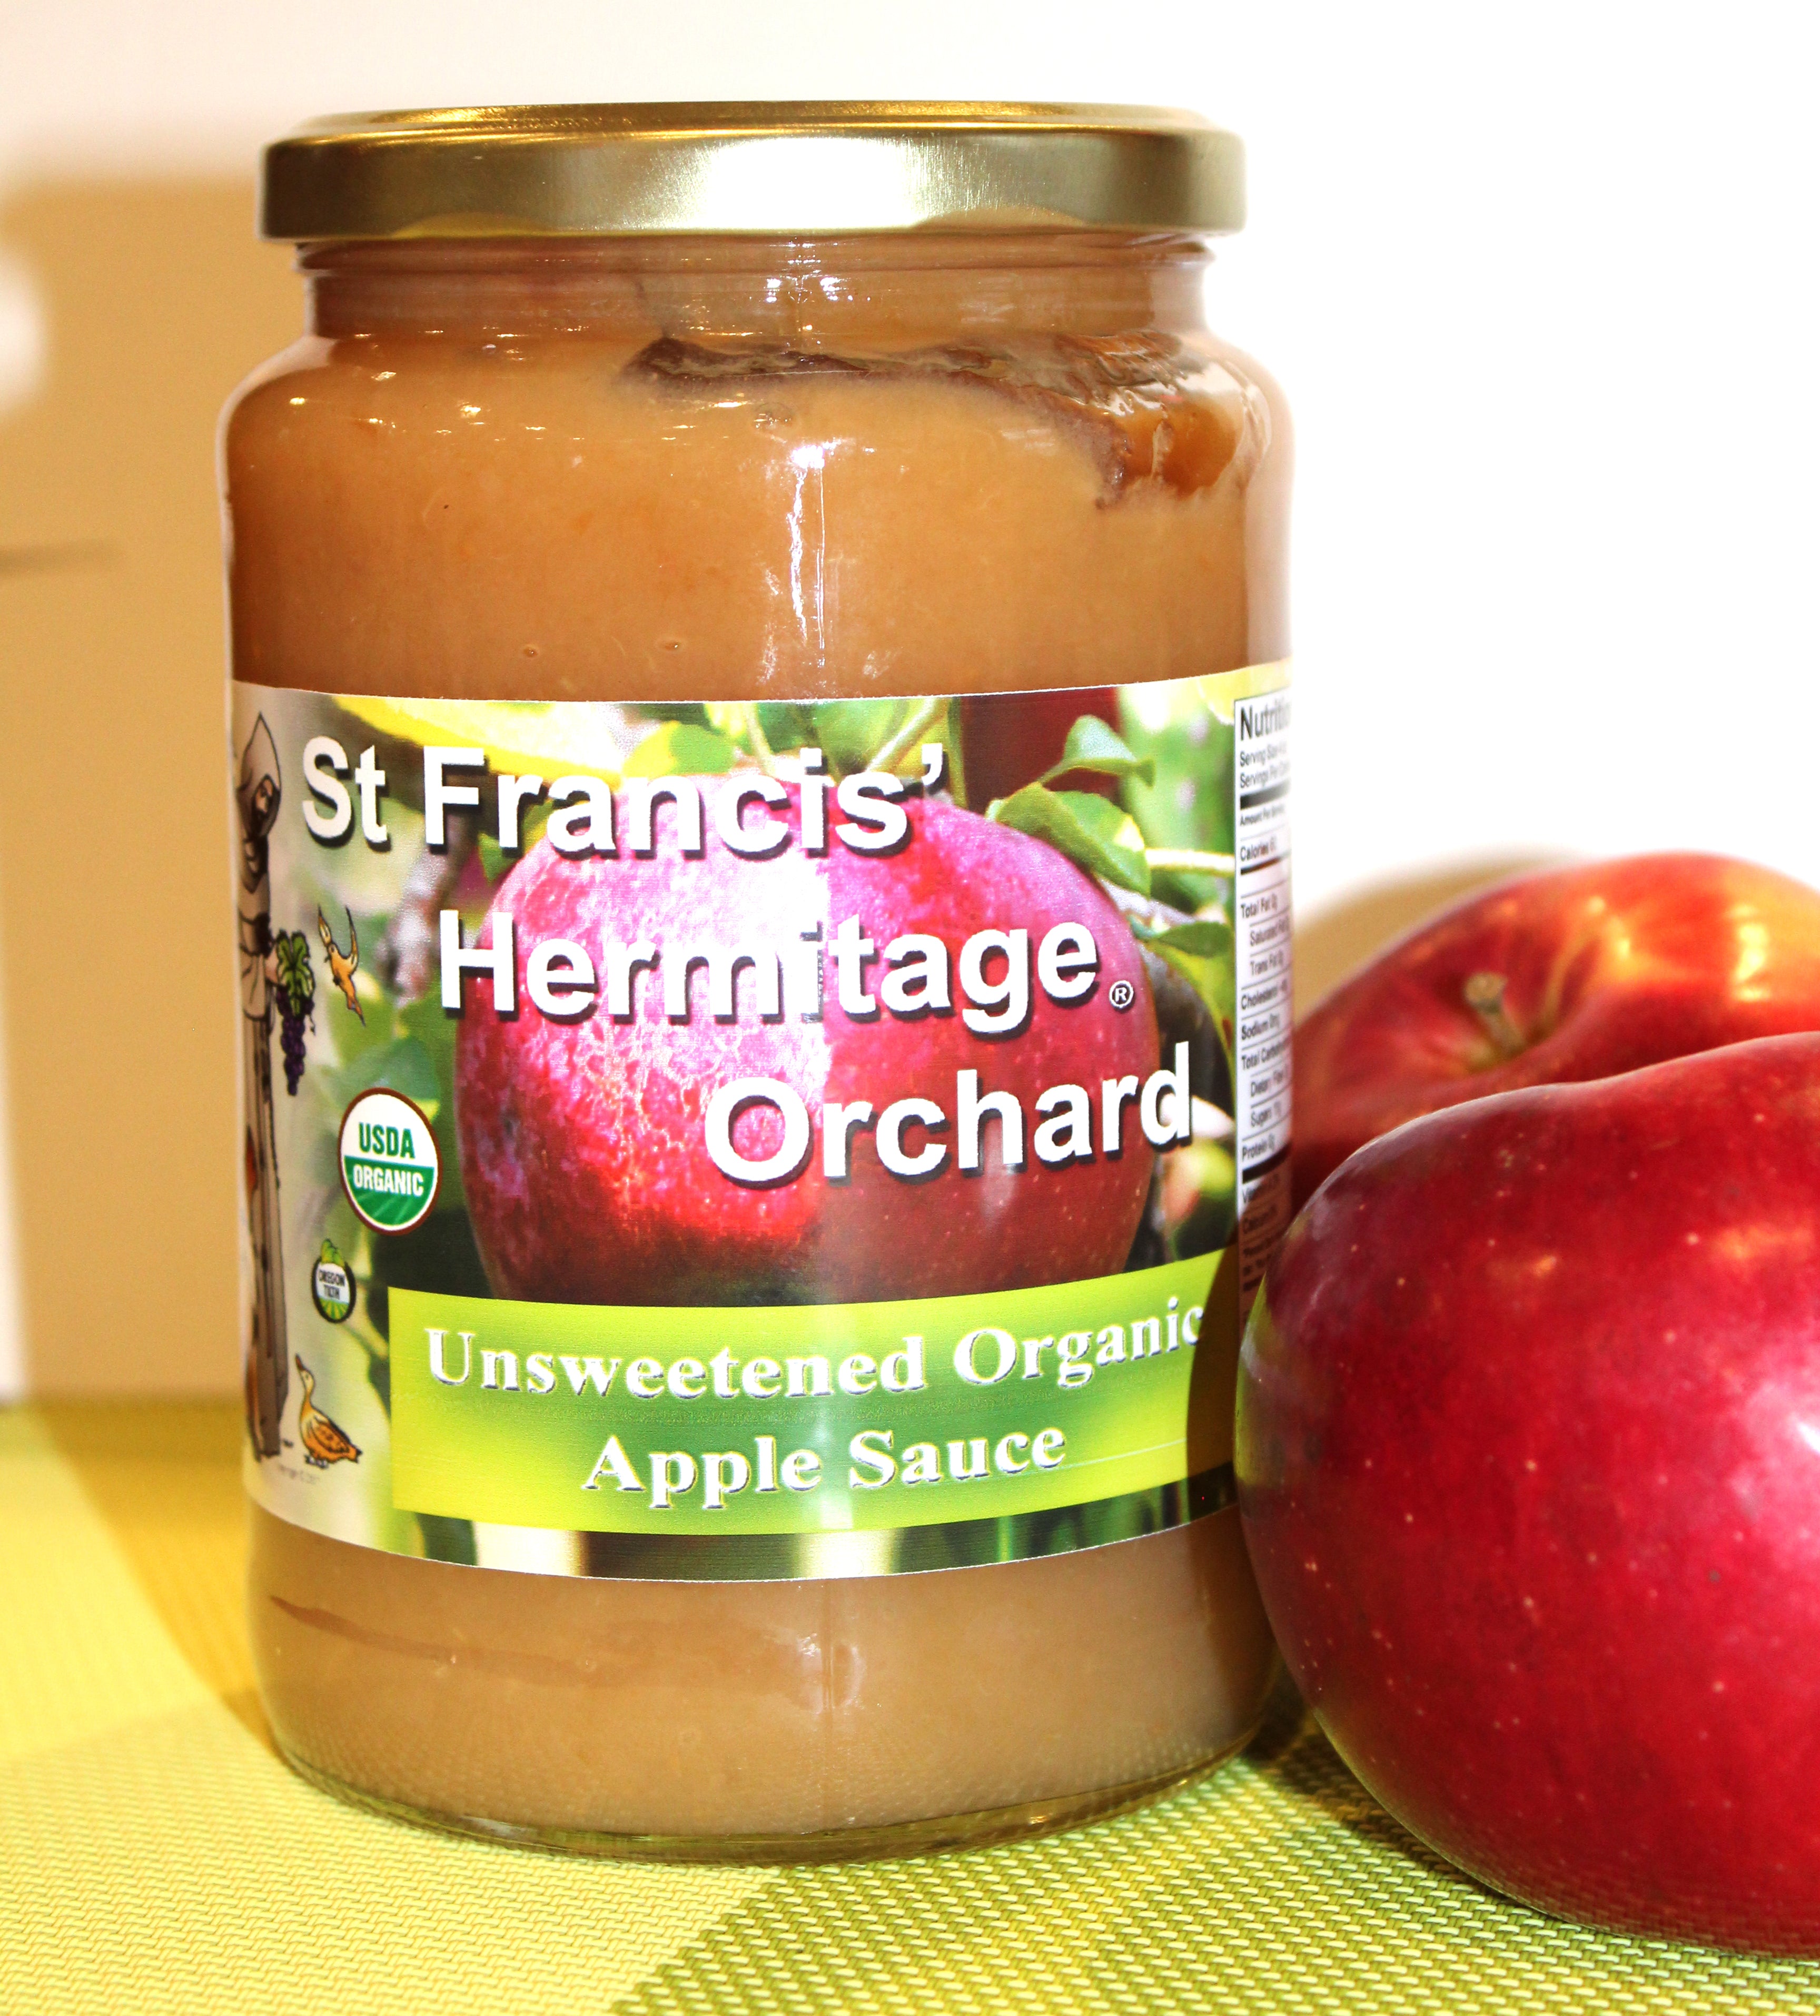 Unsweetened Organic Applesauce